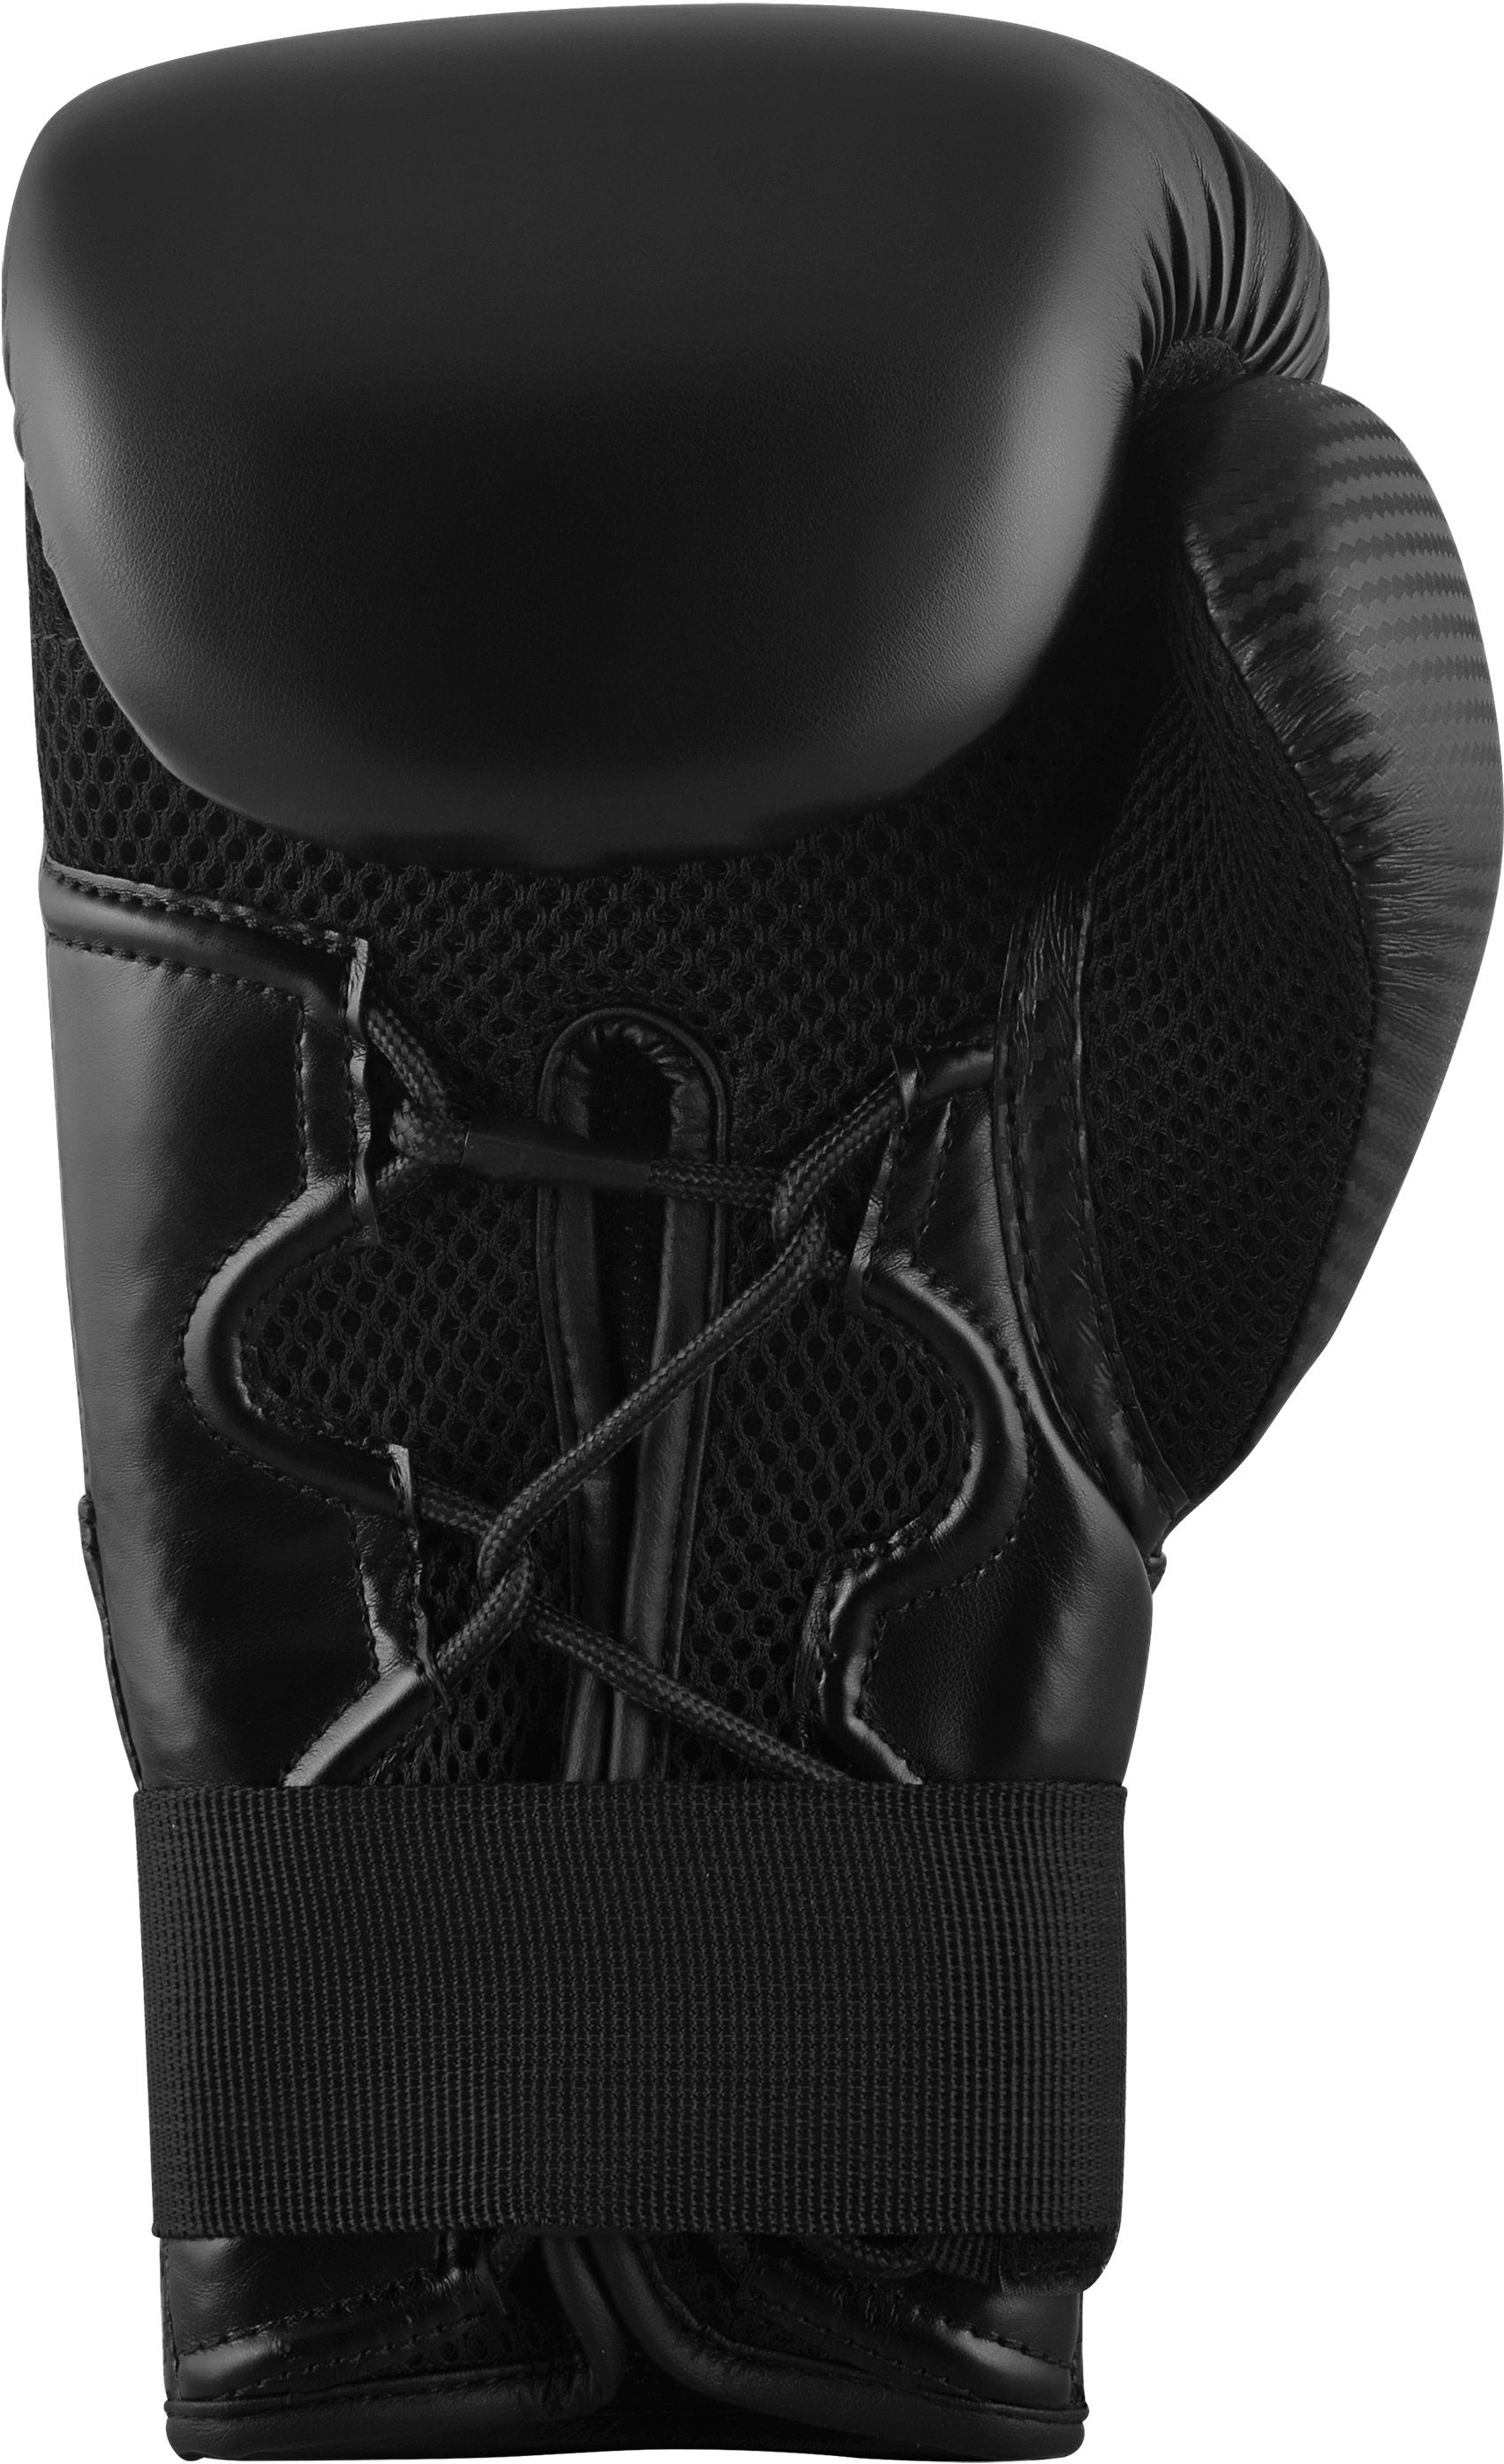 Boxhandschuhe Performance adidas schwarz